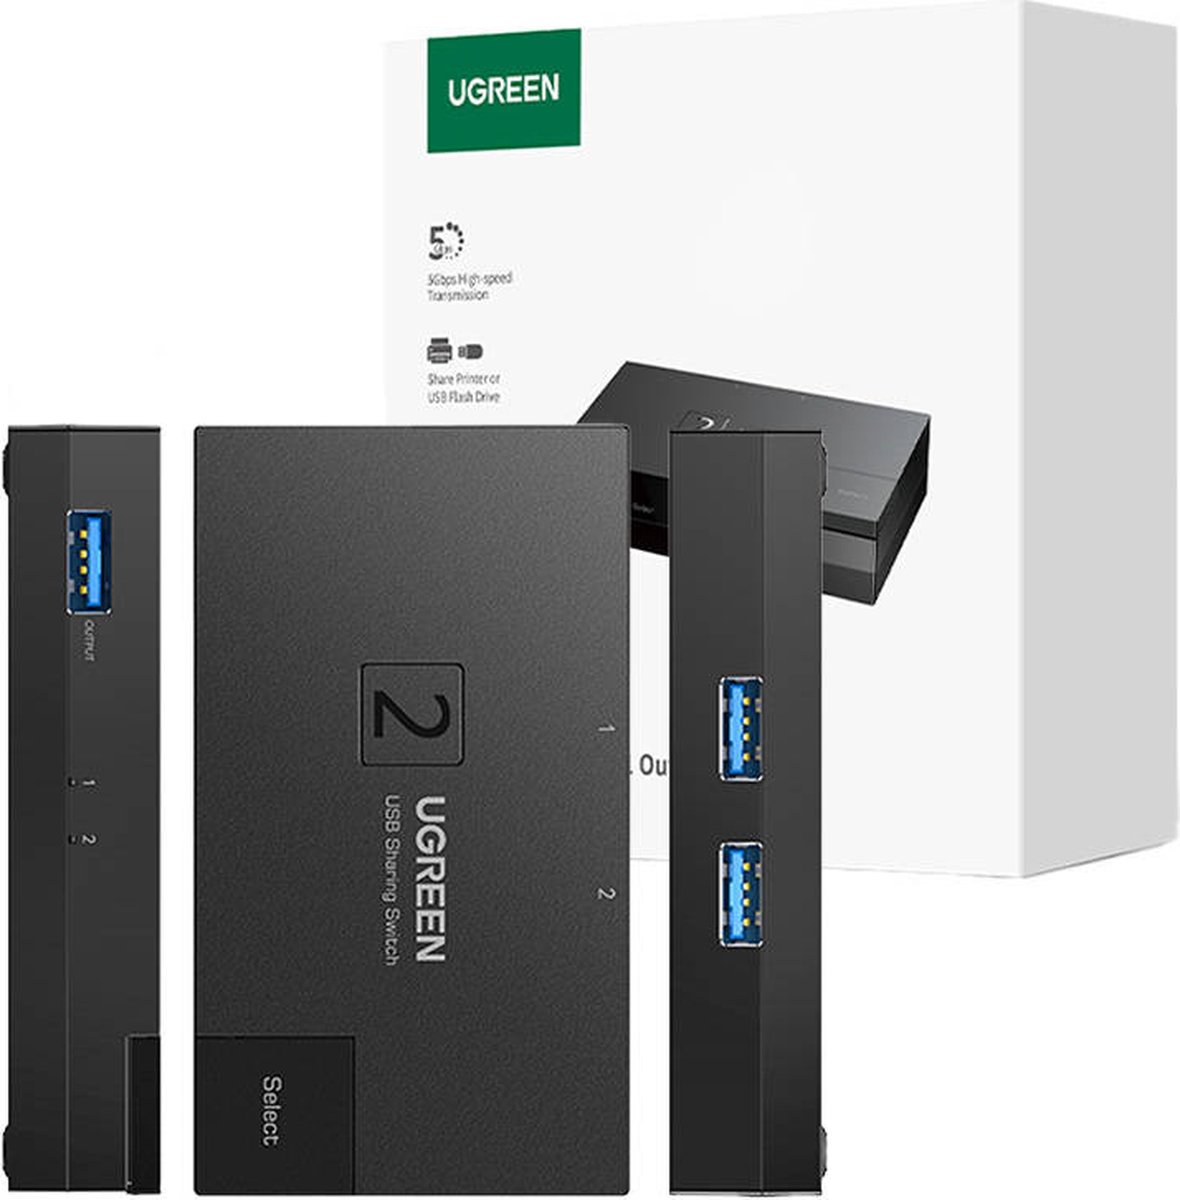 Ugreen USB 3.0 Switch - KVM Switch - Delen van Muis, Toetsenbord, Printer, Webcam, etc